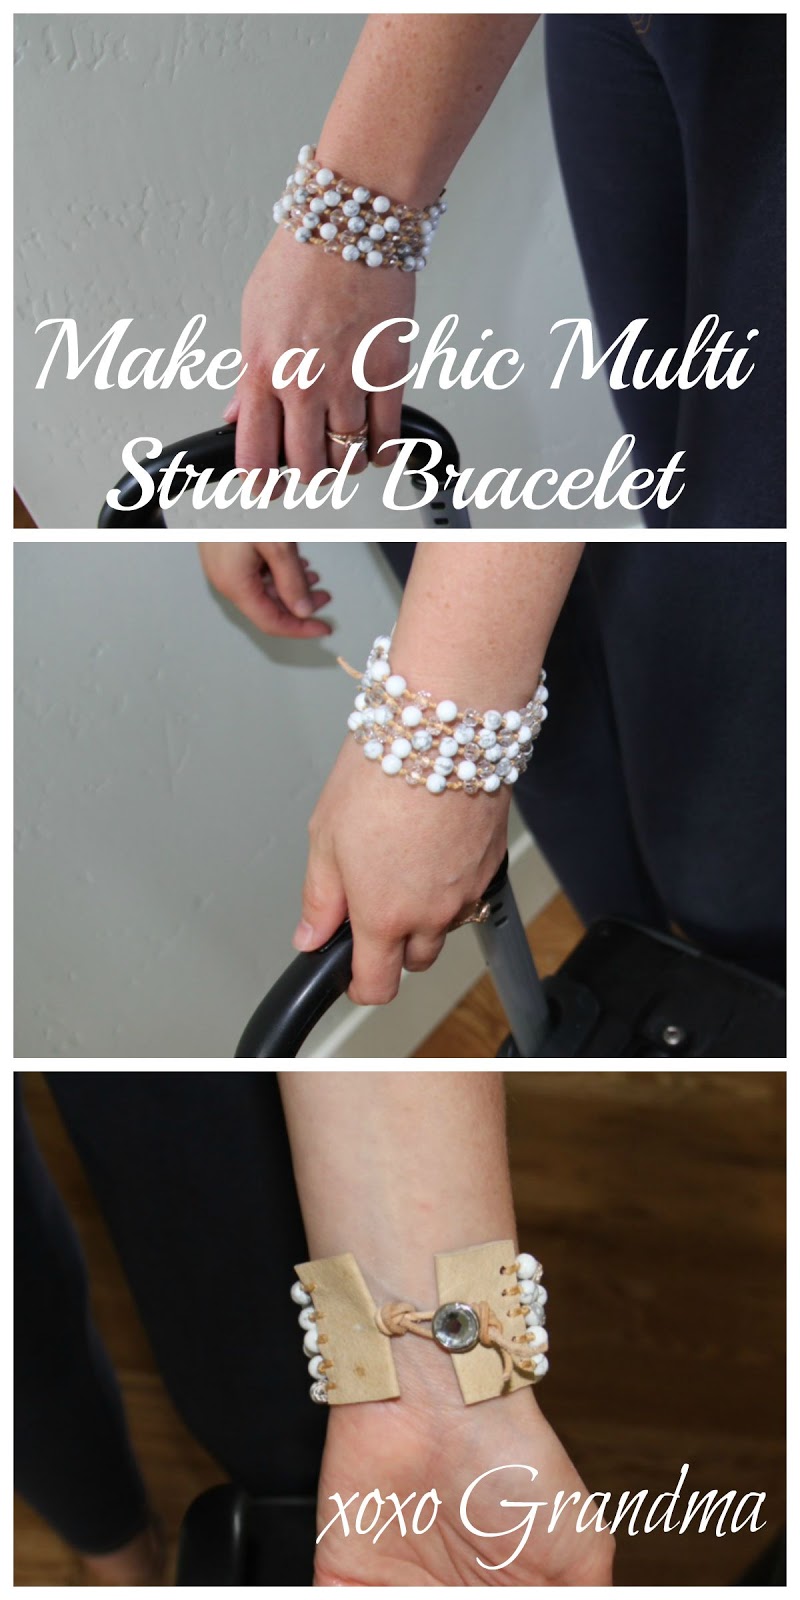 xoxo Grandma: Make a Chic Multi Strand Bracelet